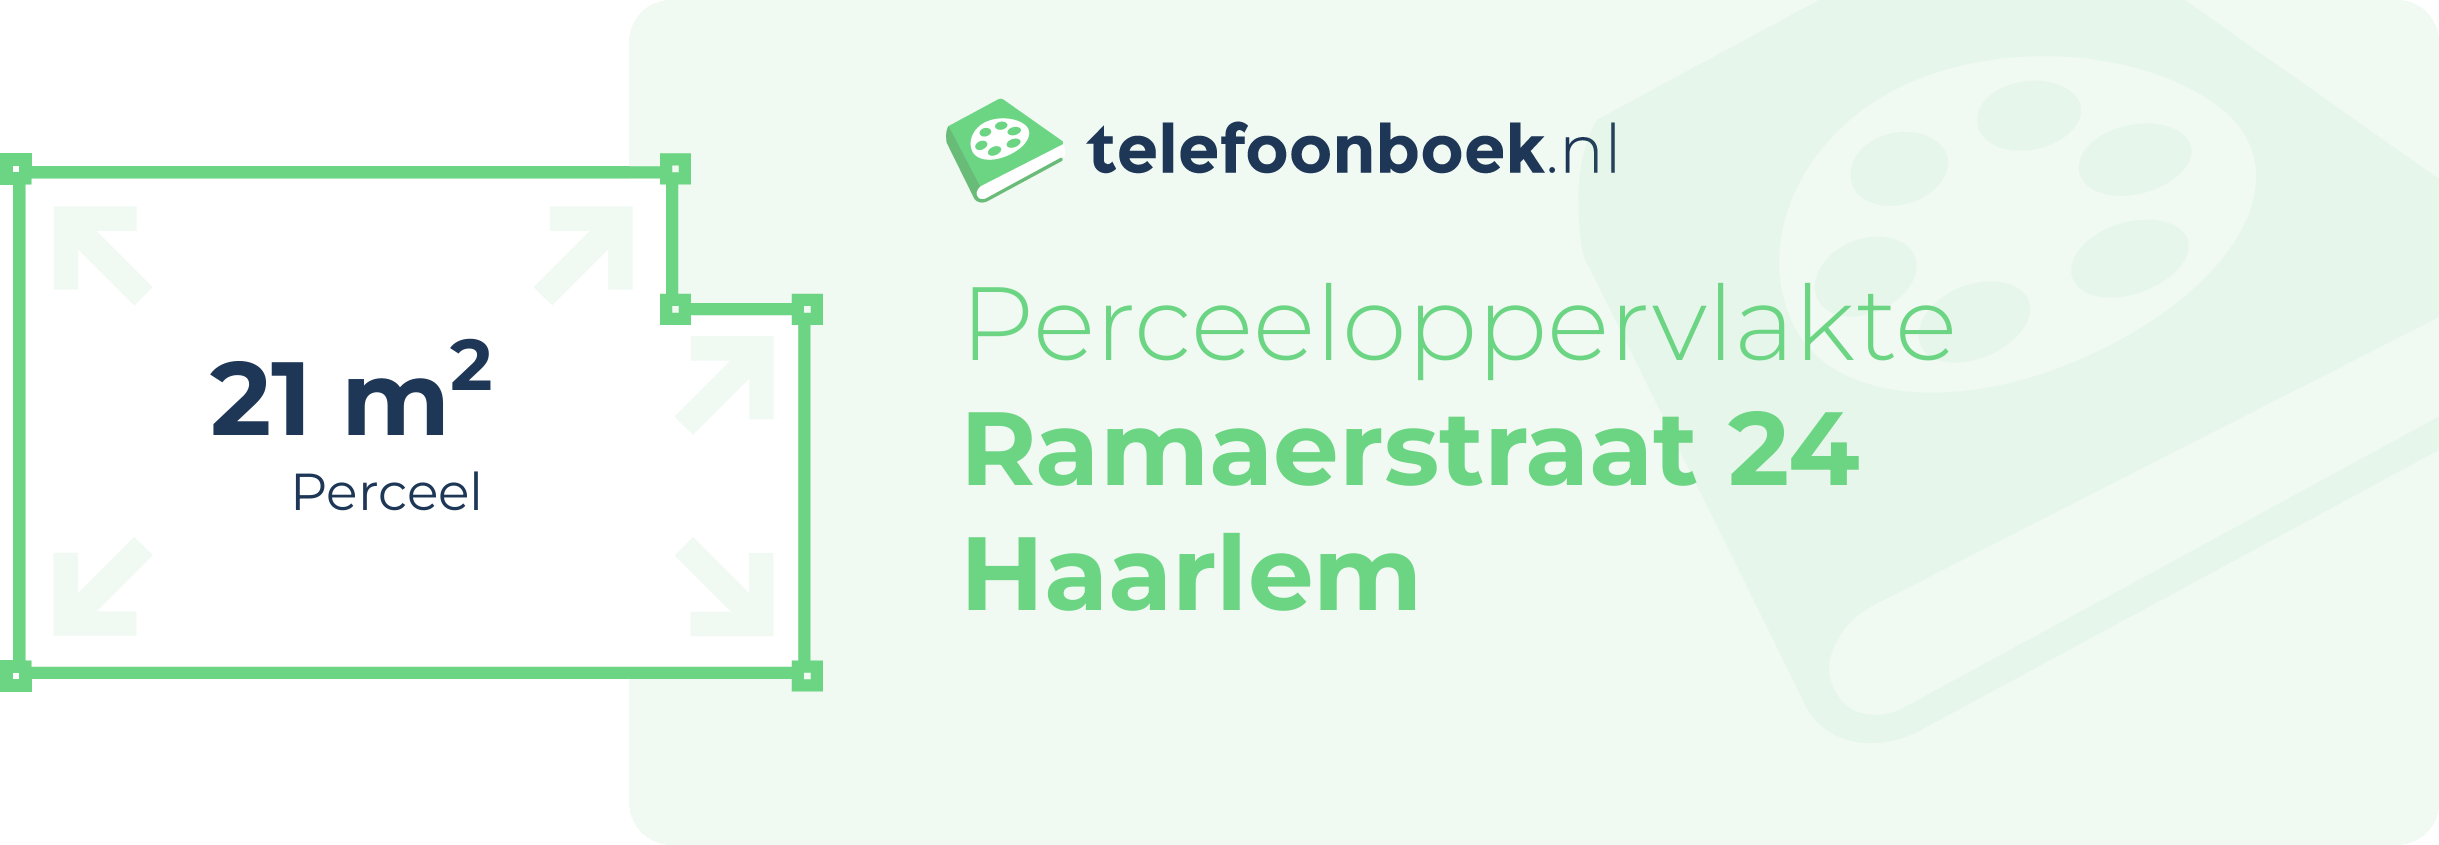 Perceeloppervlakte Ramaerstraat 24 Haarlem